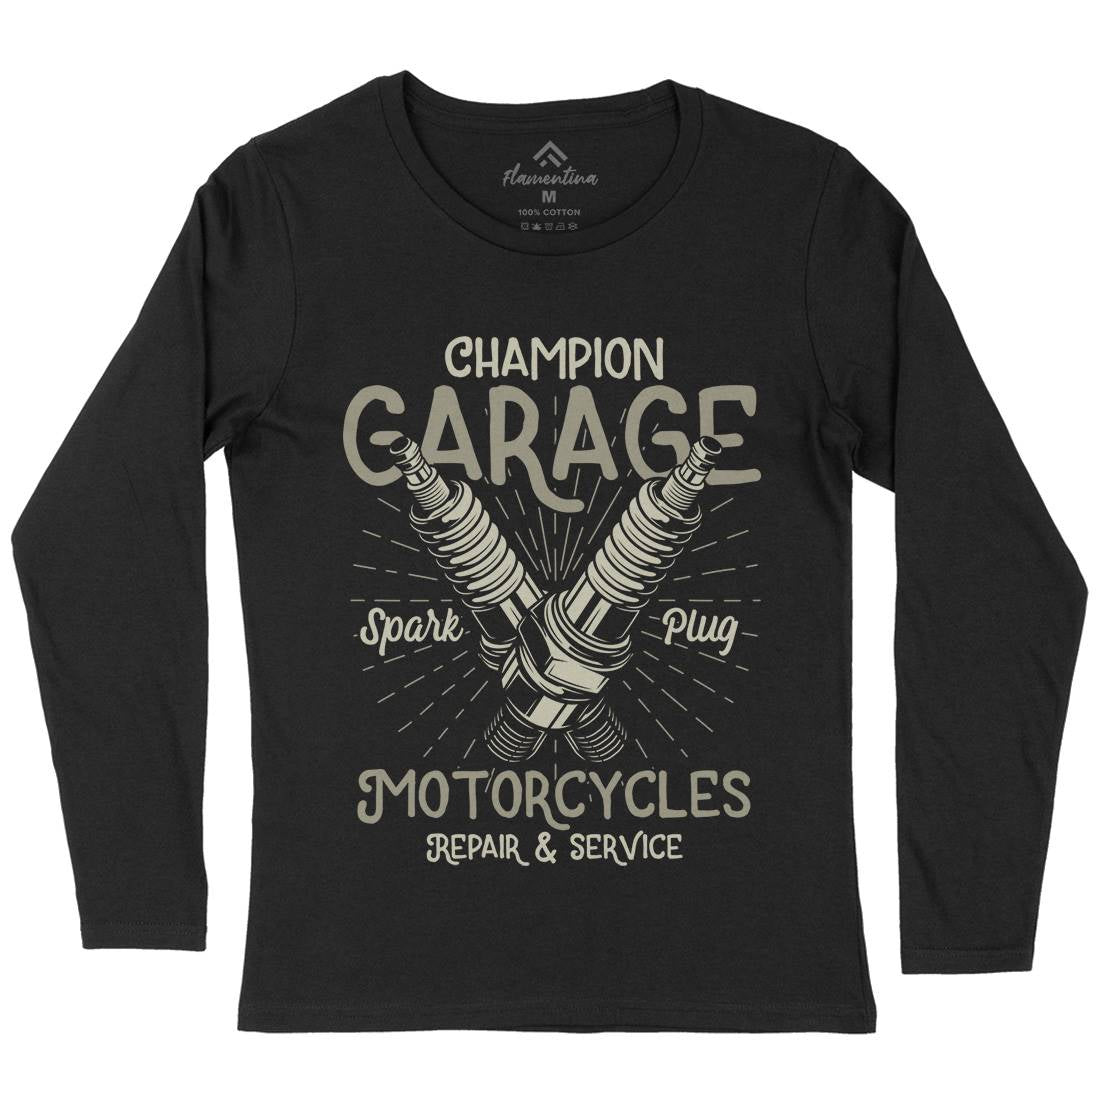 Champion Garage Womens Long Sleeve T-Shirt Motorcycles B835